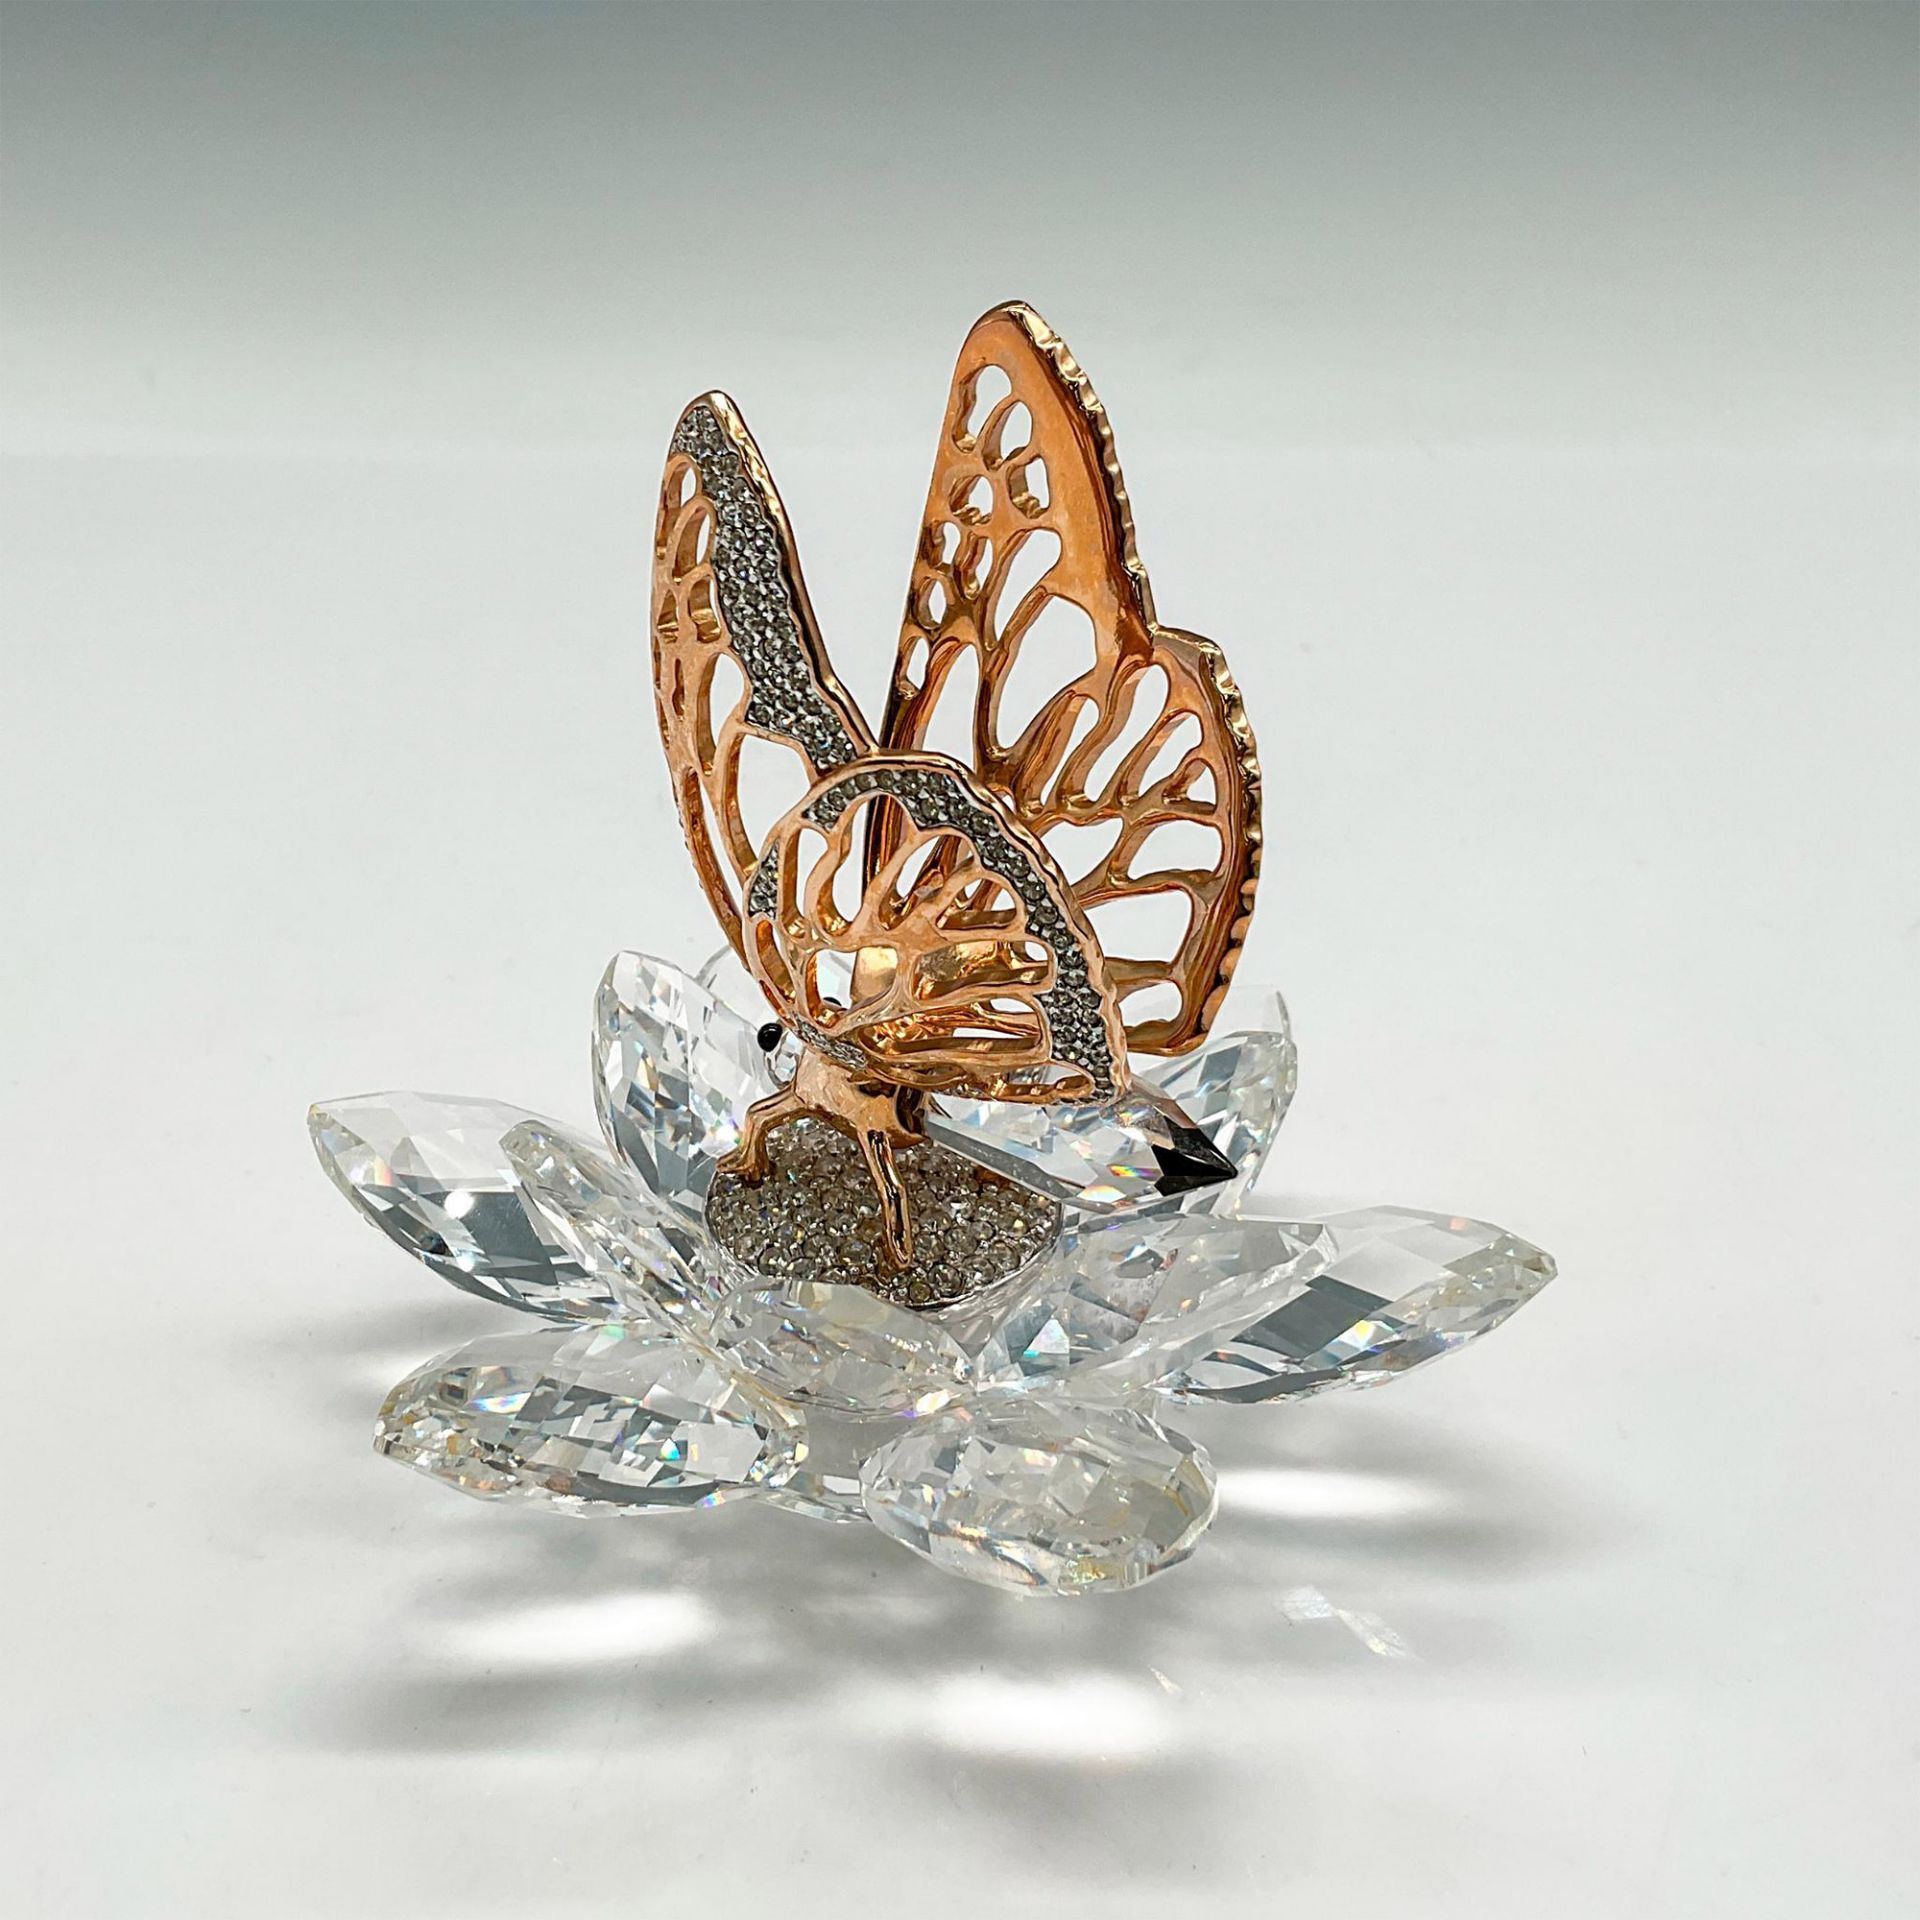 Swarovski Silver Crystal Figurine, In Flight Butterfly - Image 2 of 3